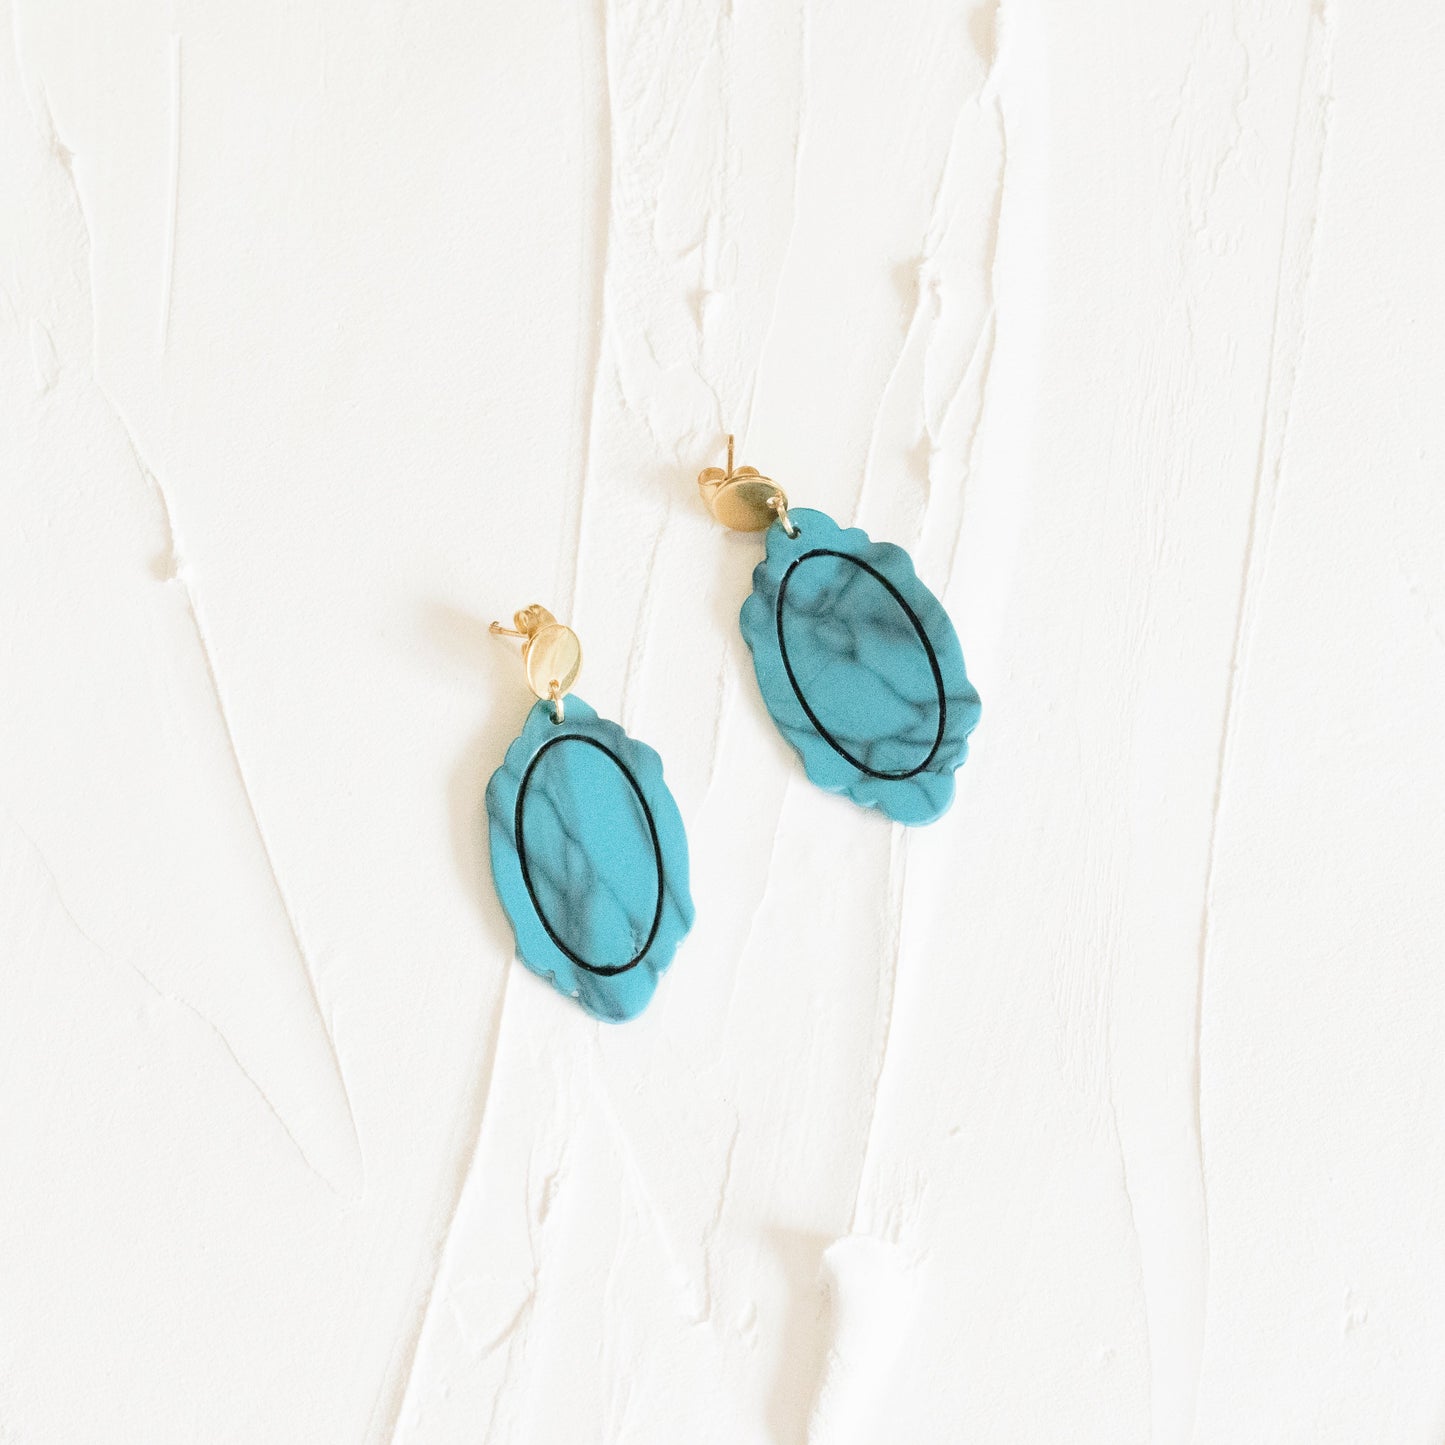 Vintage Oval Framed Marble Earrings - Turquoise Blue - Claymore NZ - Earrings